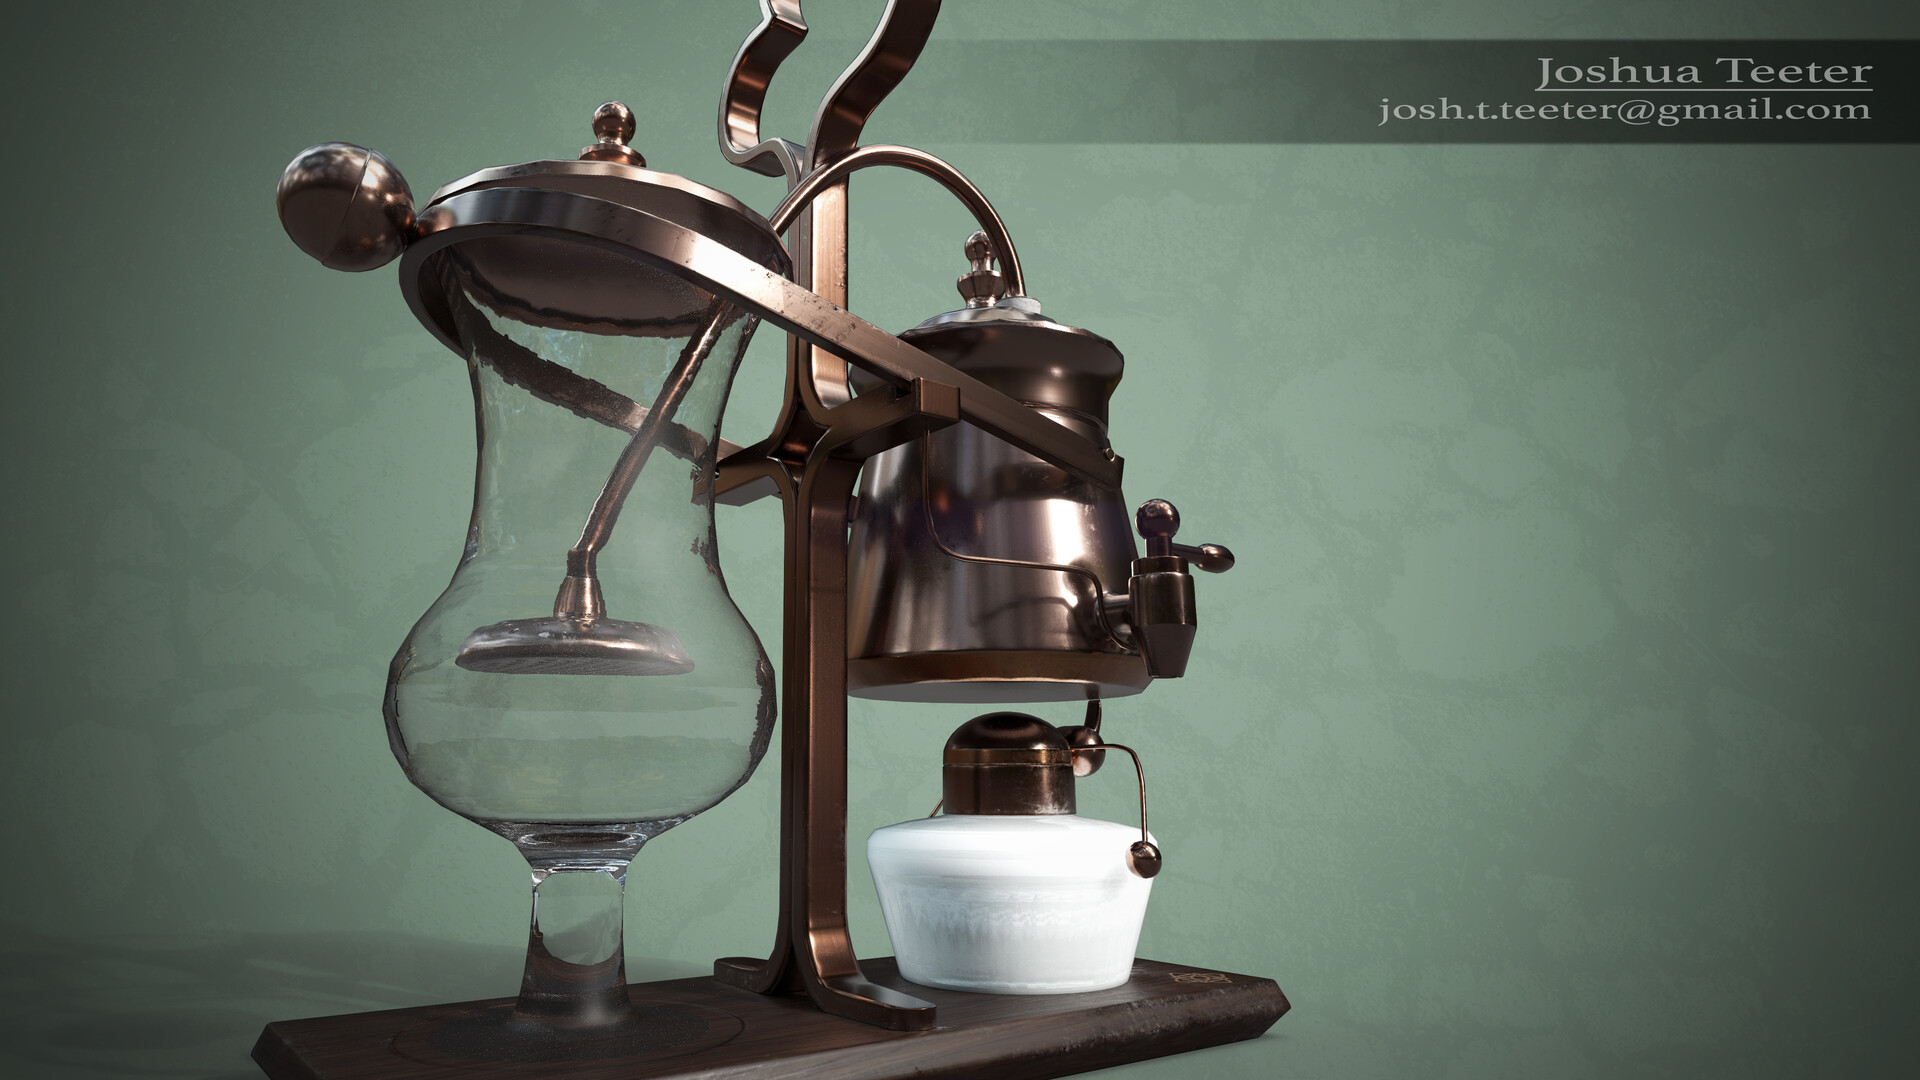 Joshua Teeter - Antique Belgian Coffee Maker Asset